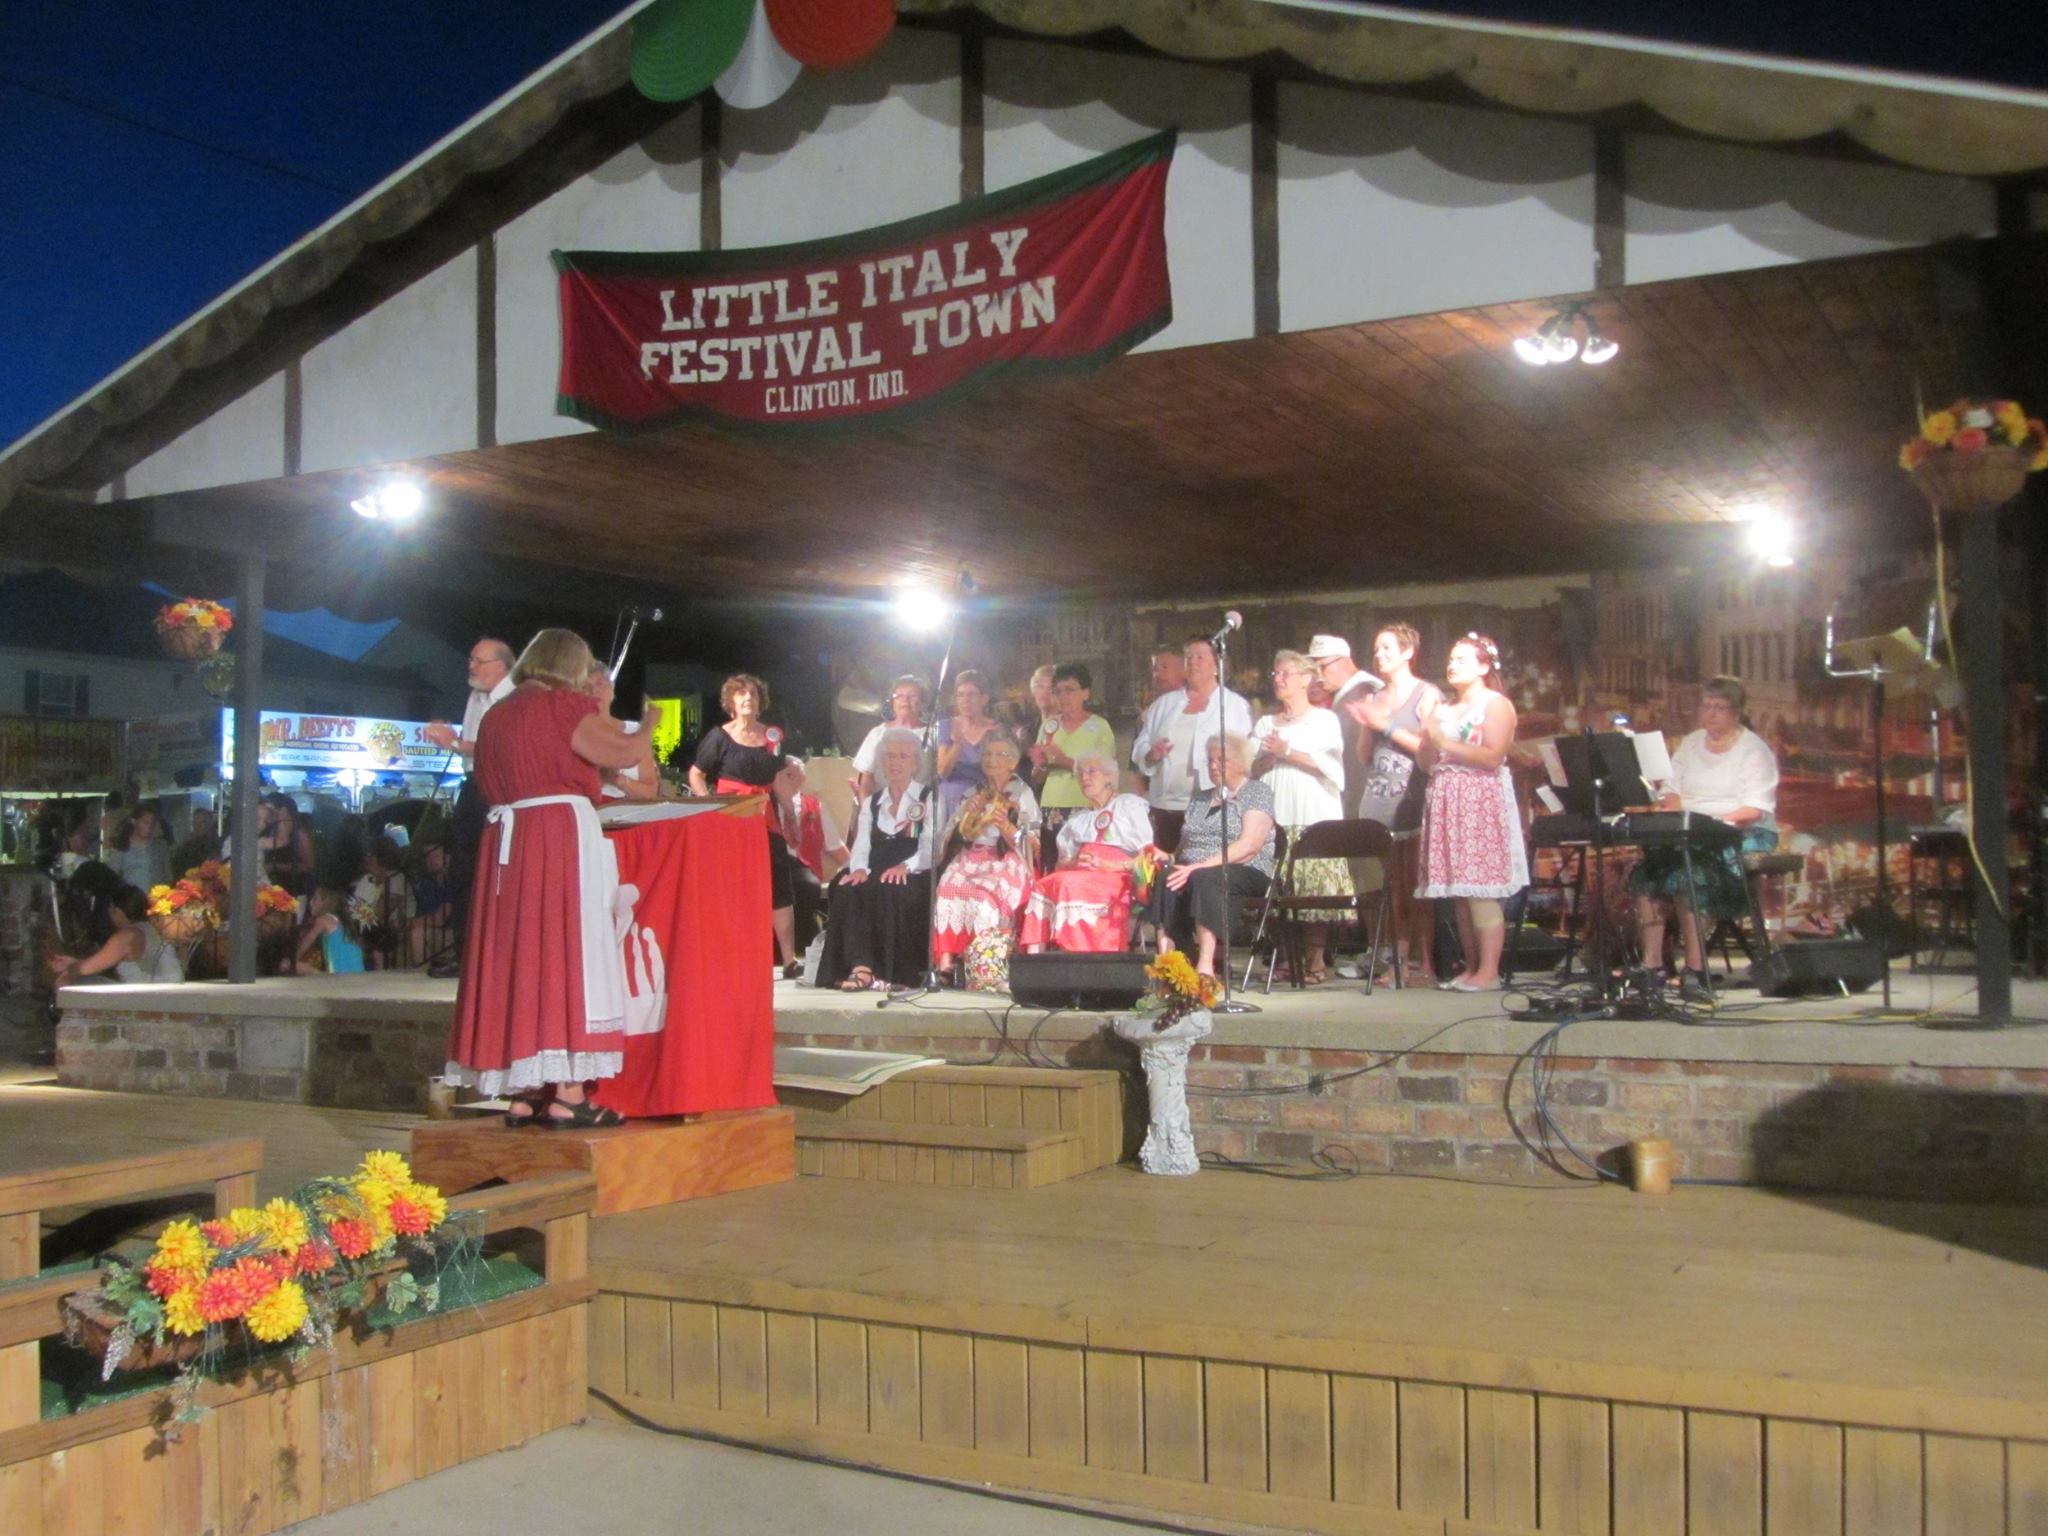 Little Italy Festival In Clinton, Indiana Is A MustSee Italian Festival